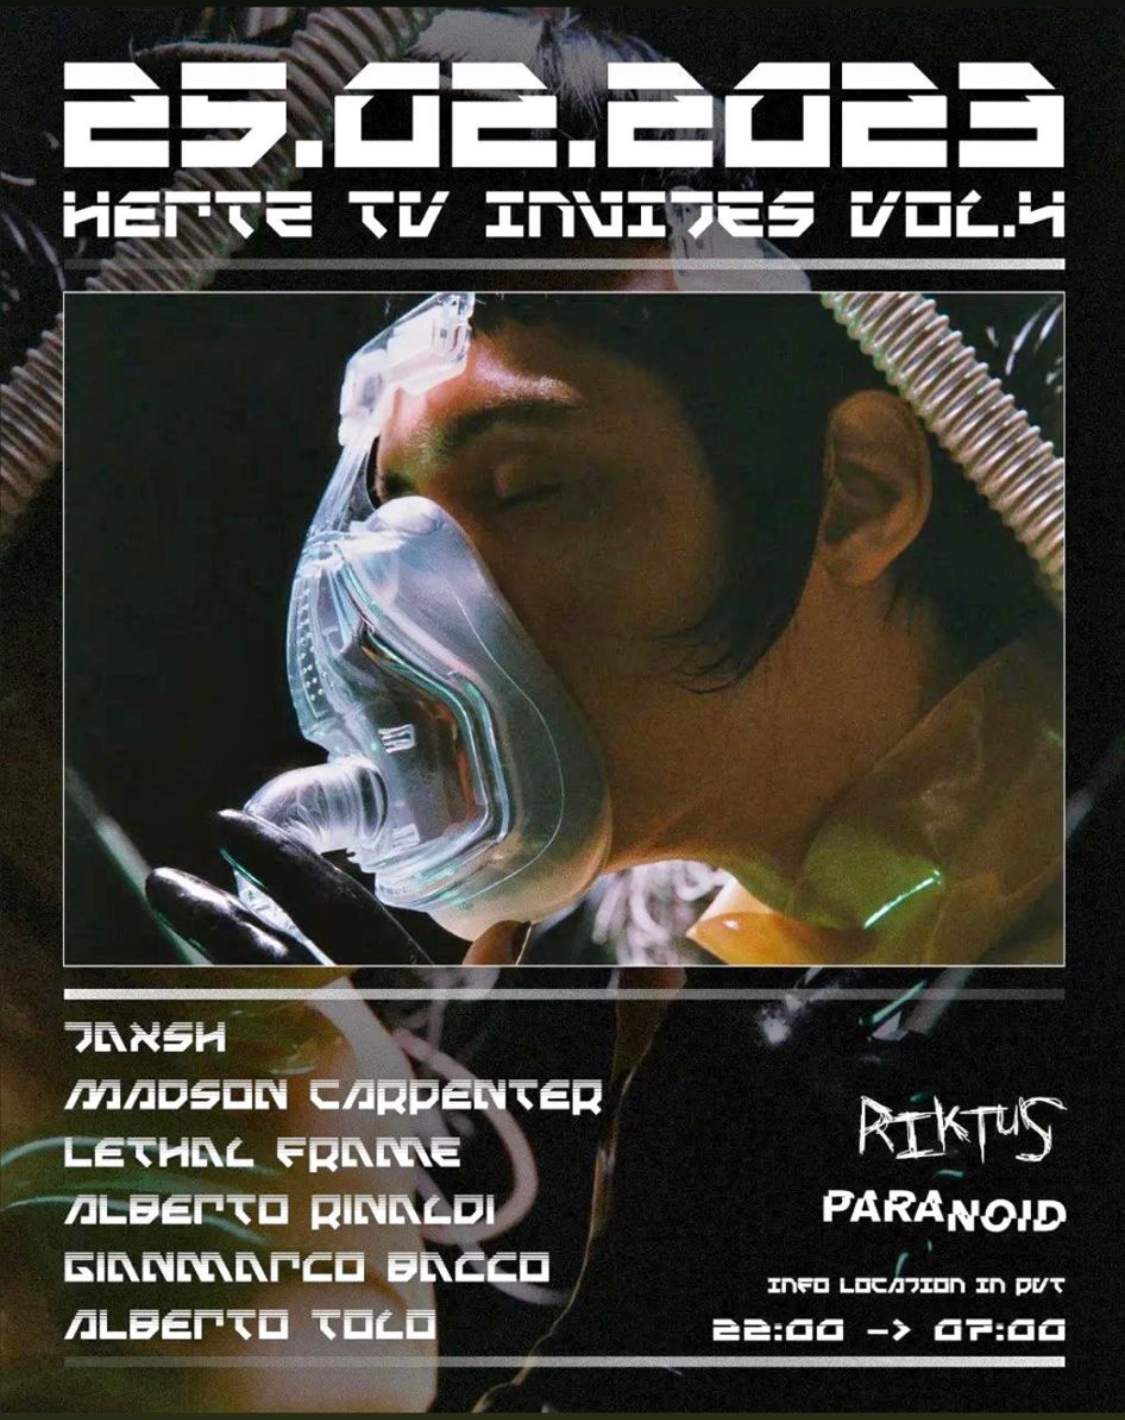 HertzTv invites vol.4 - フライヤー表